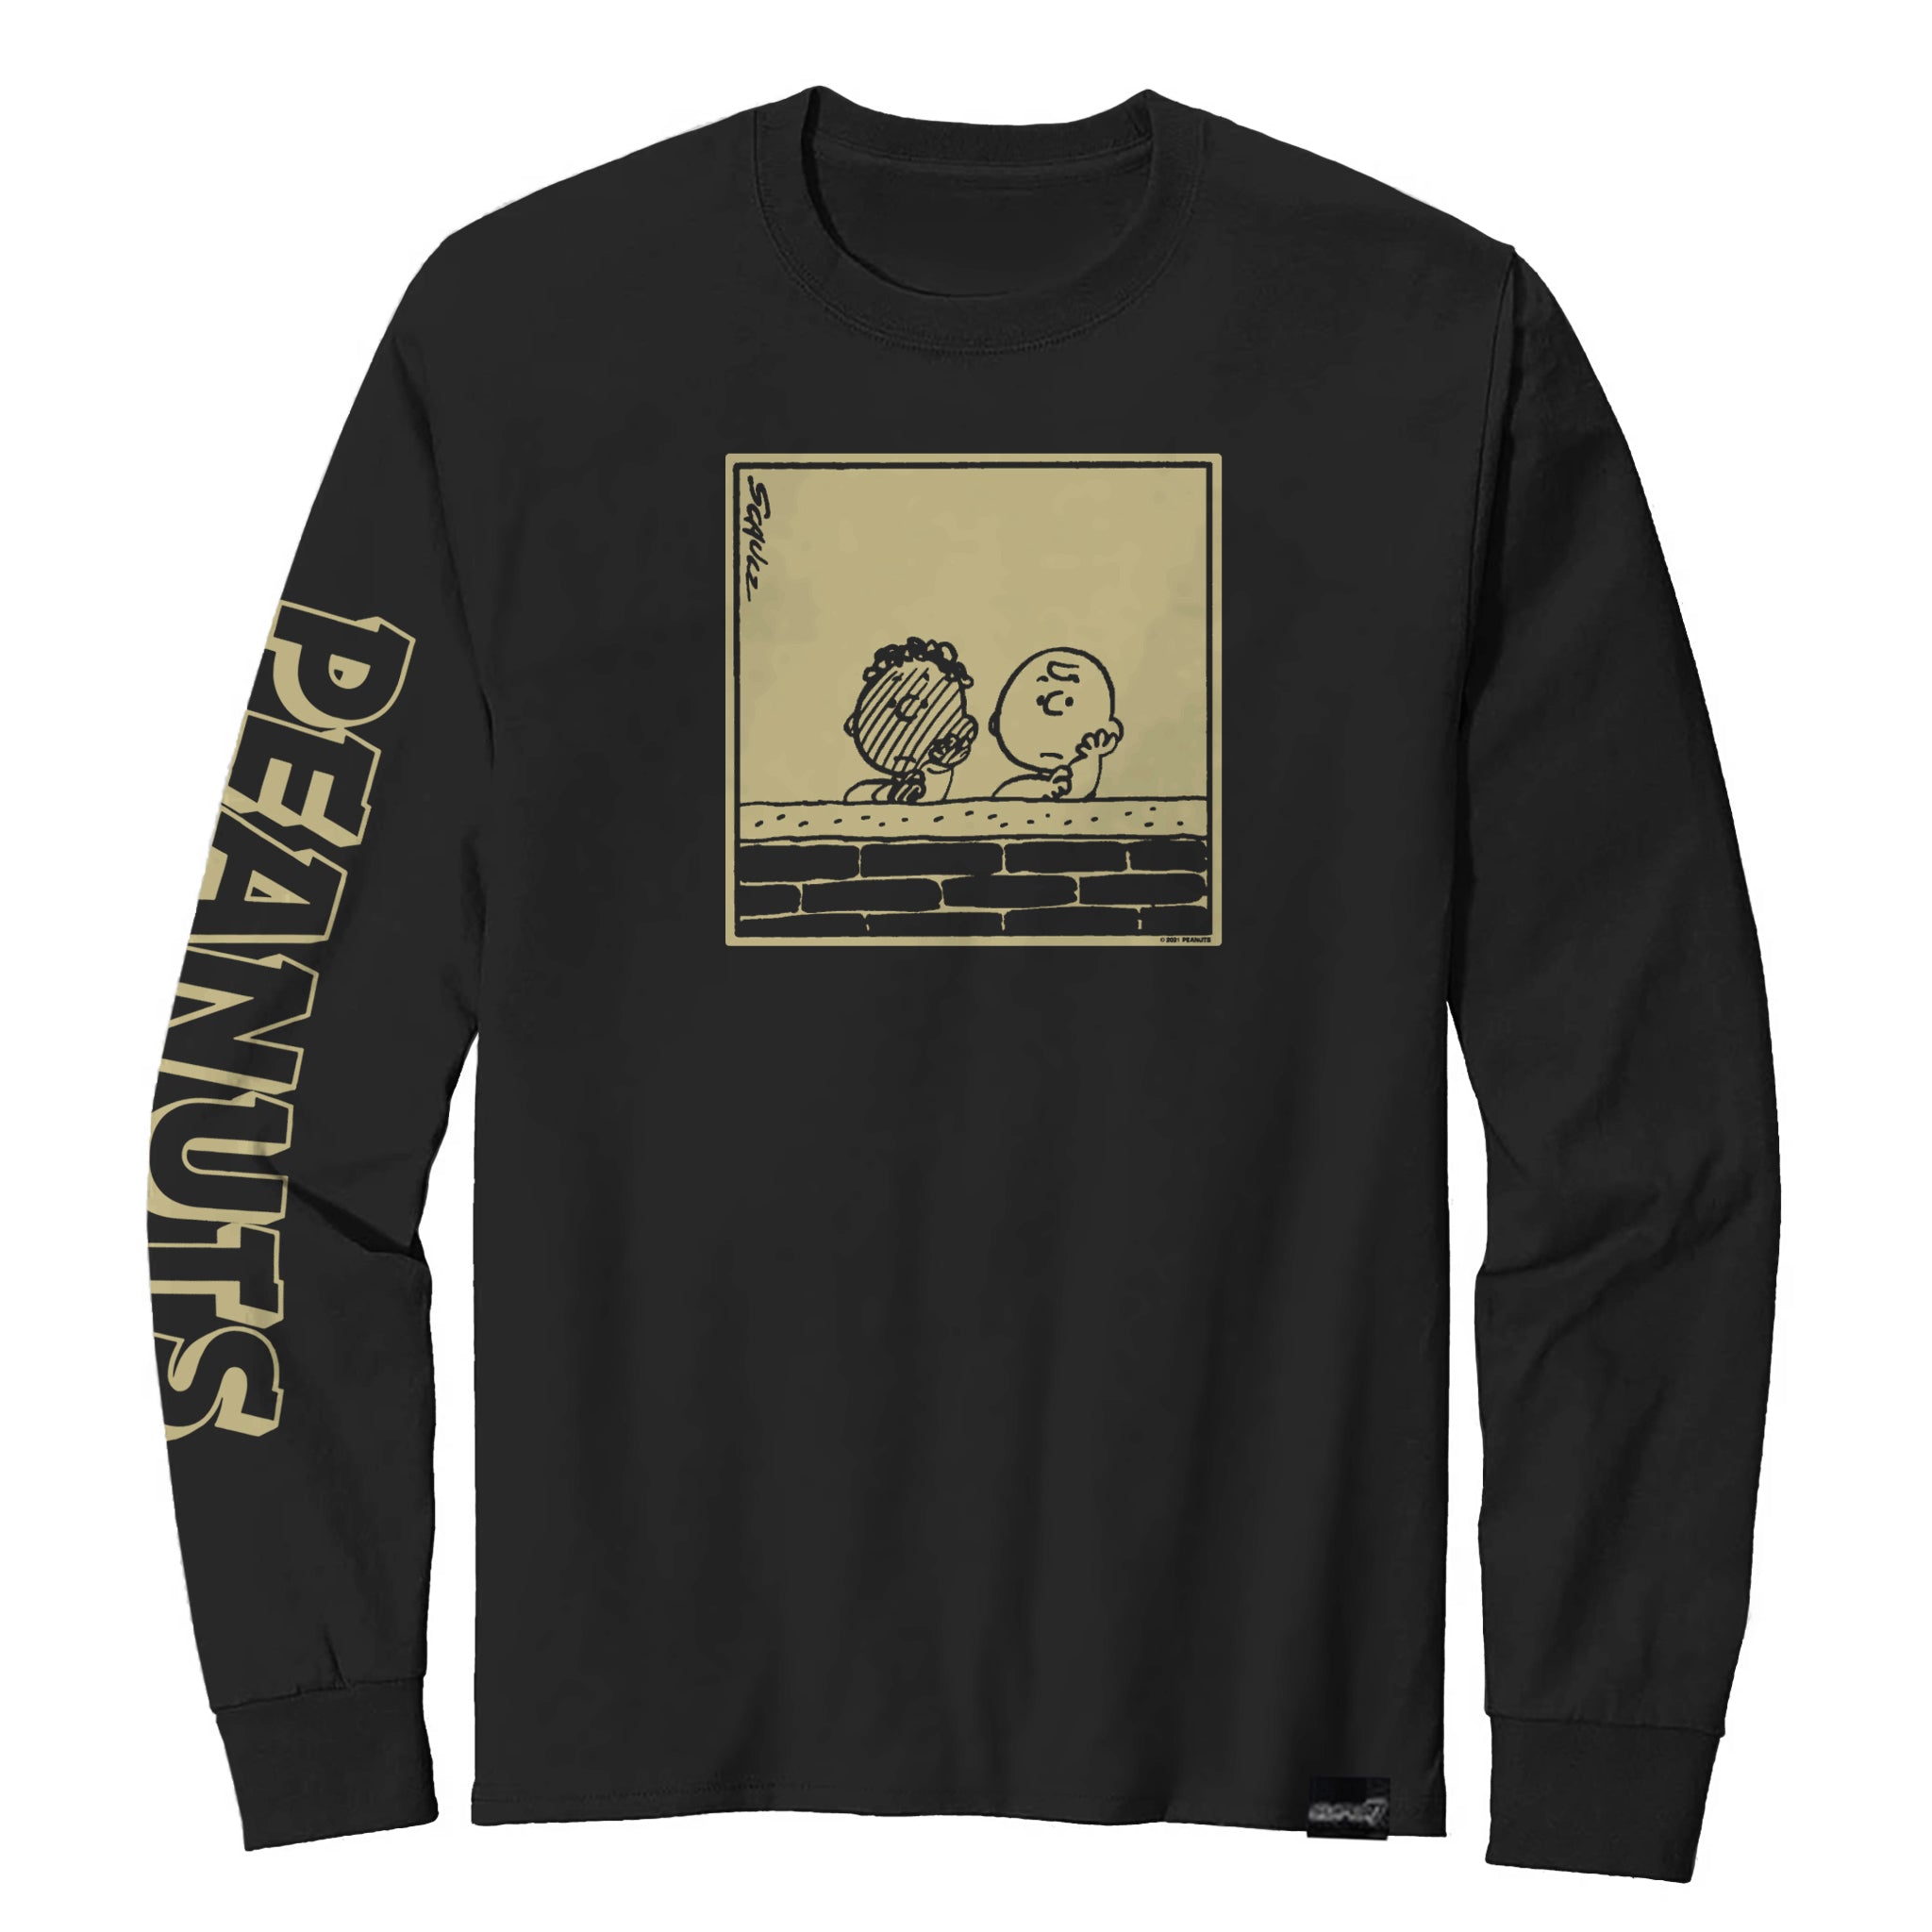 Peanuts T-Shirt - Franklin & Charlie Brown Long Sleeve